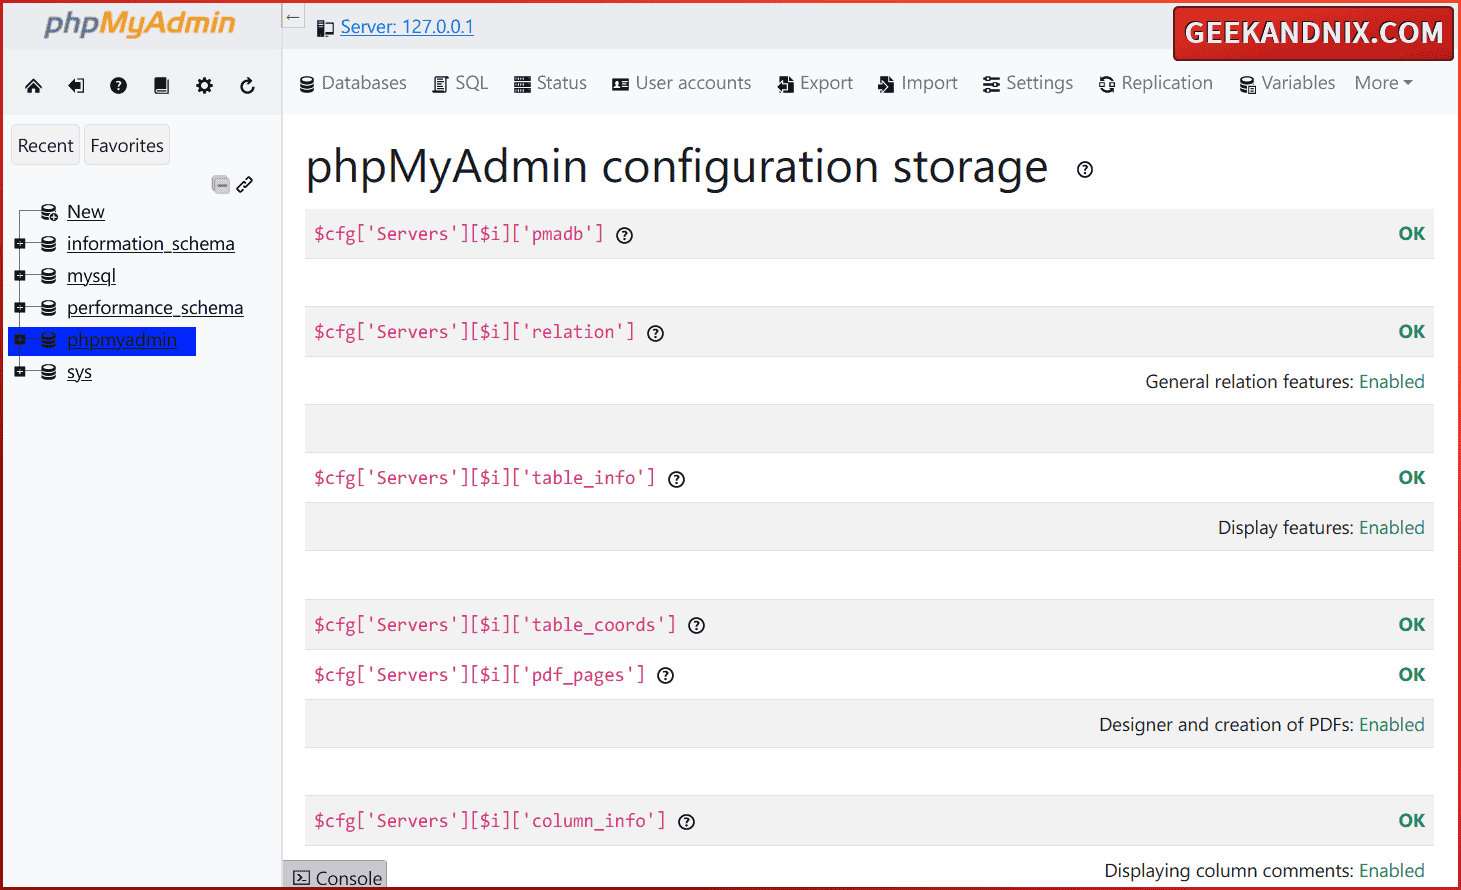 phpMyAdmin storage configuration complete